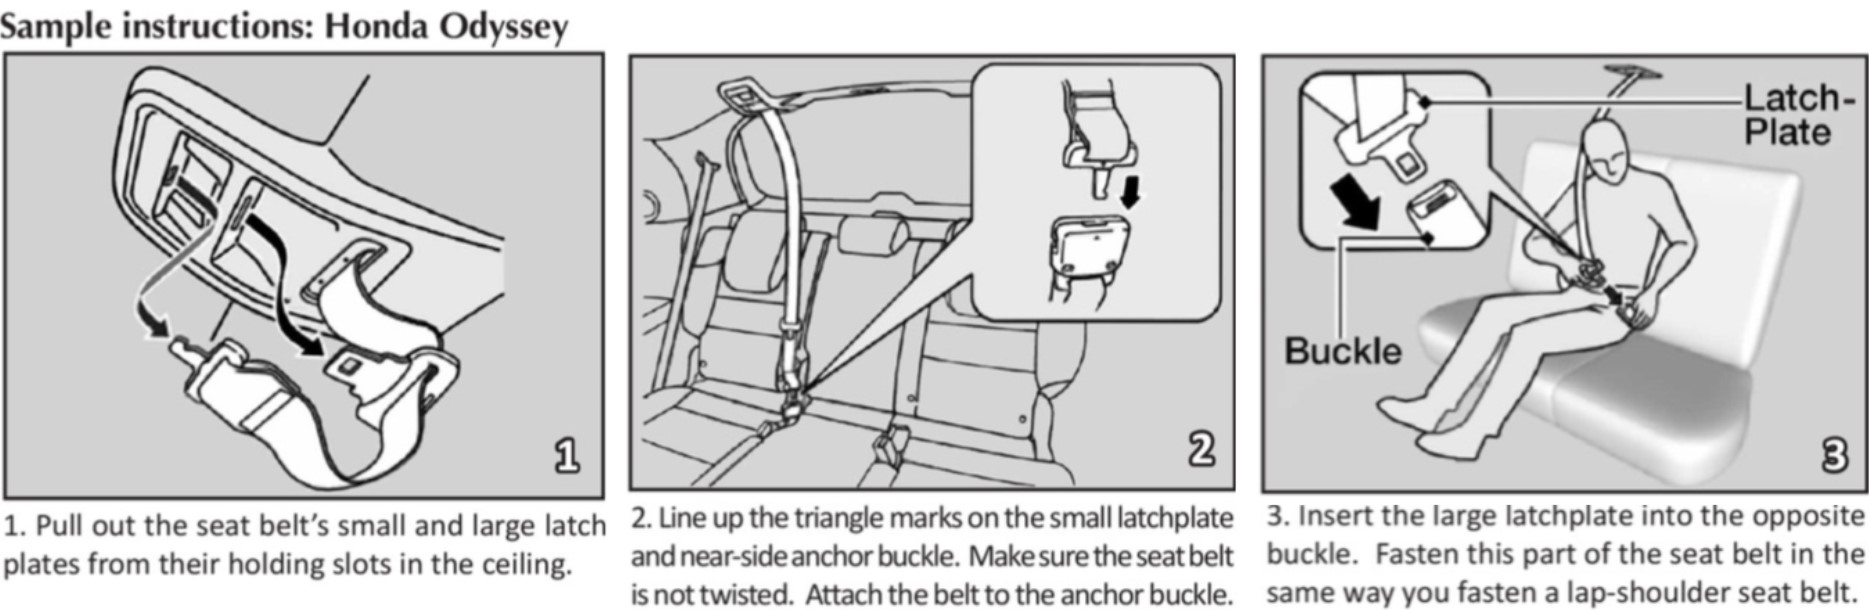 Honda Dual-Latchplate Instructions